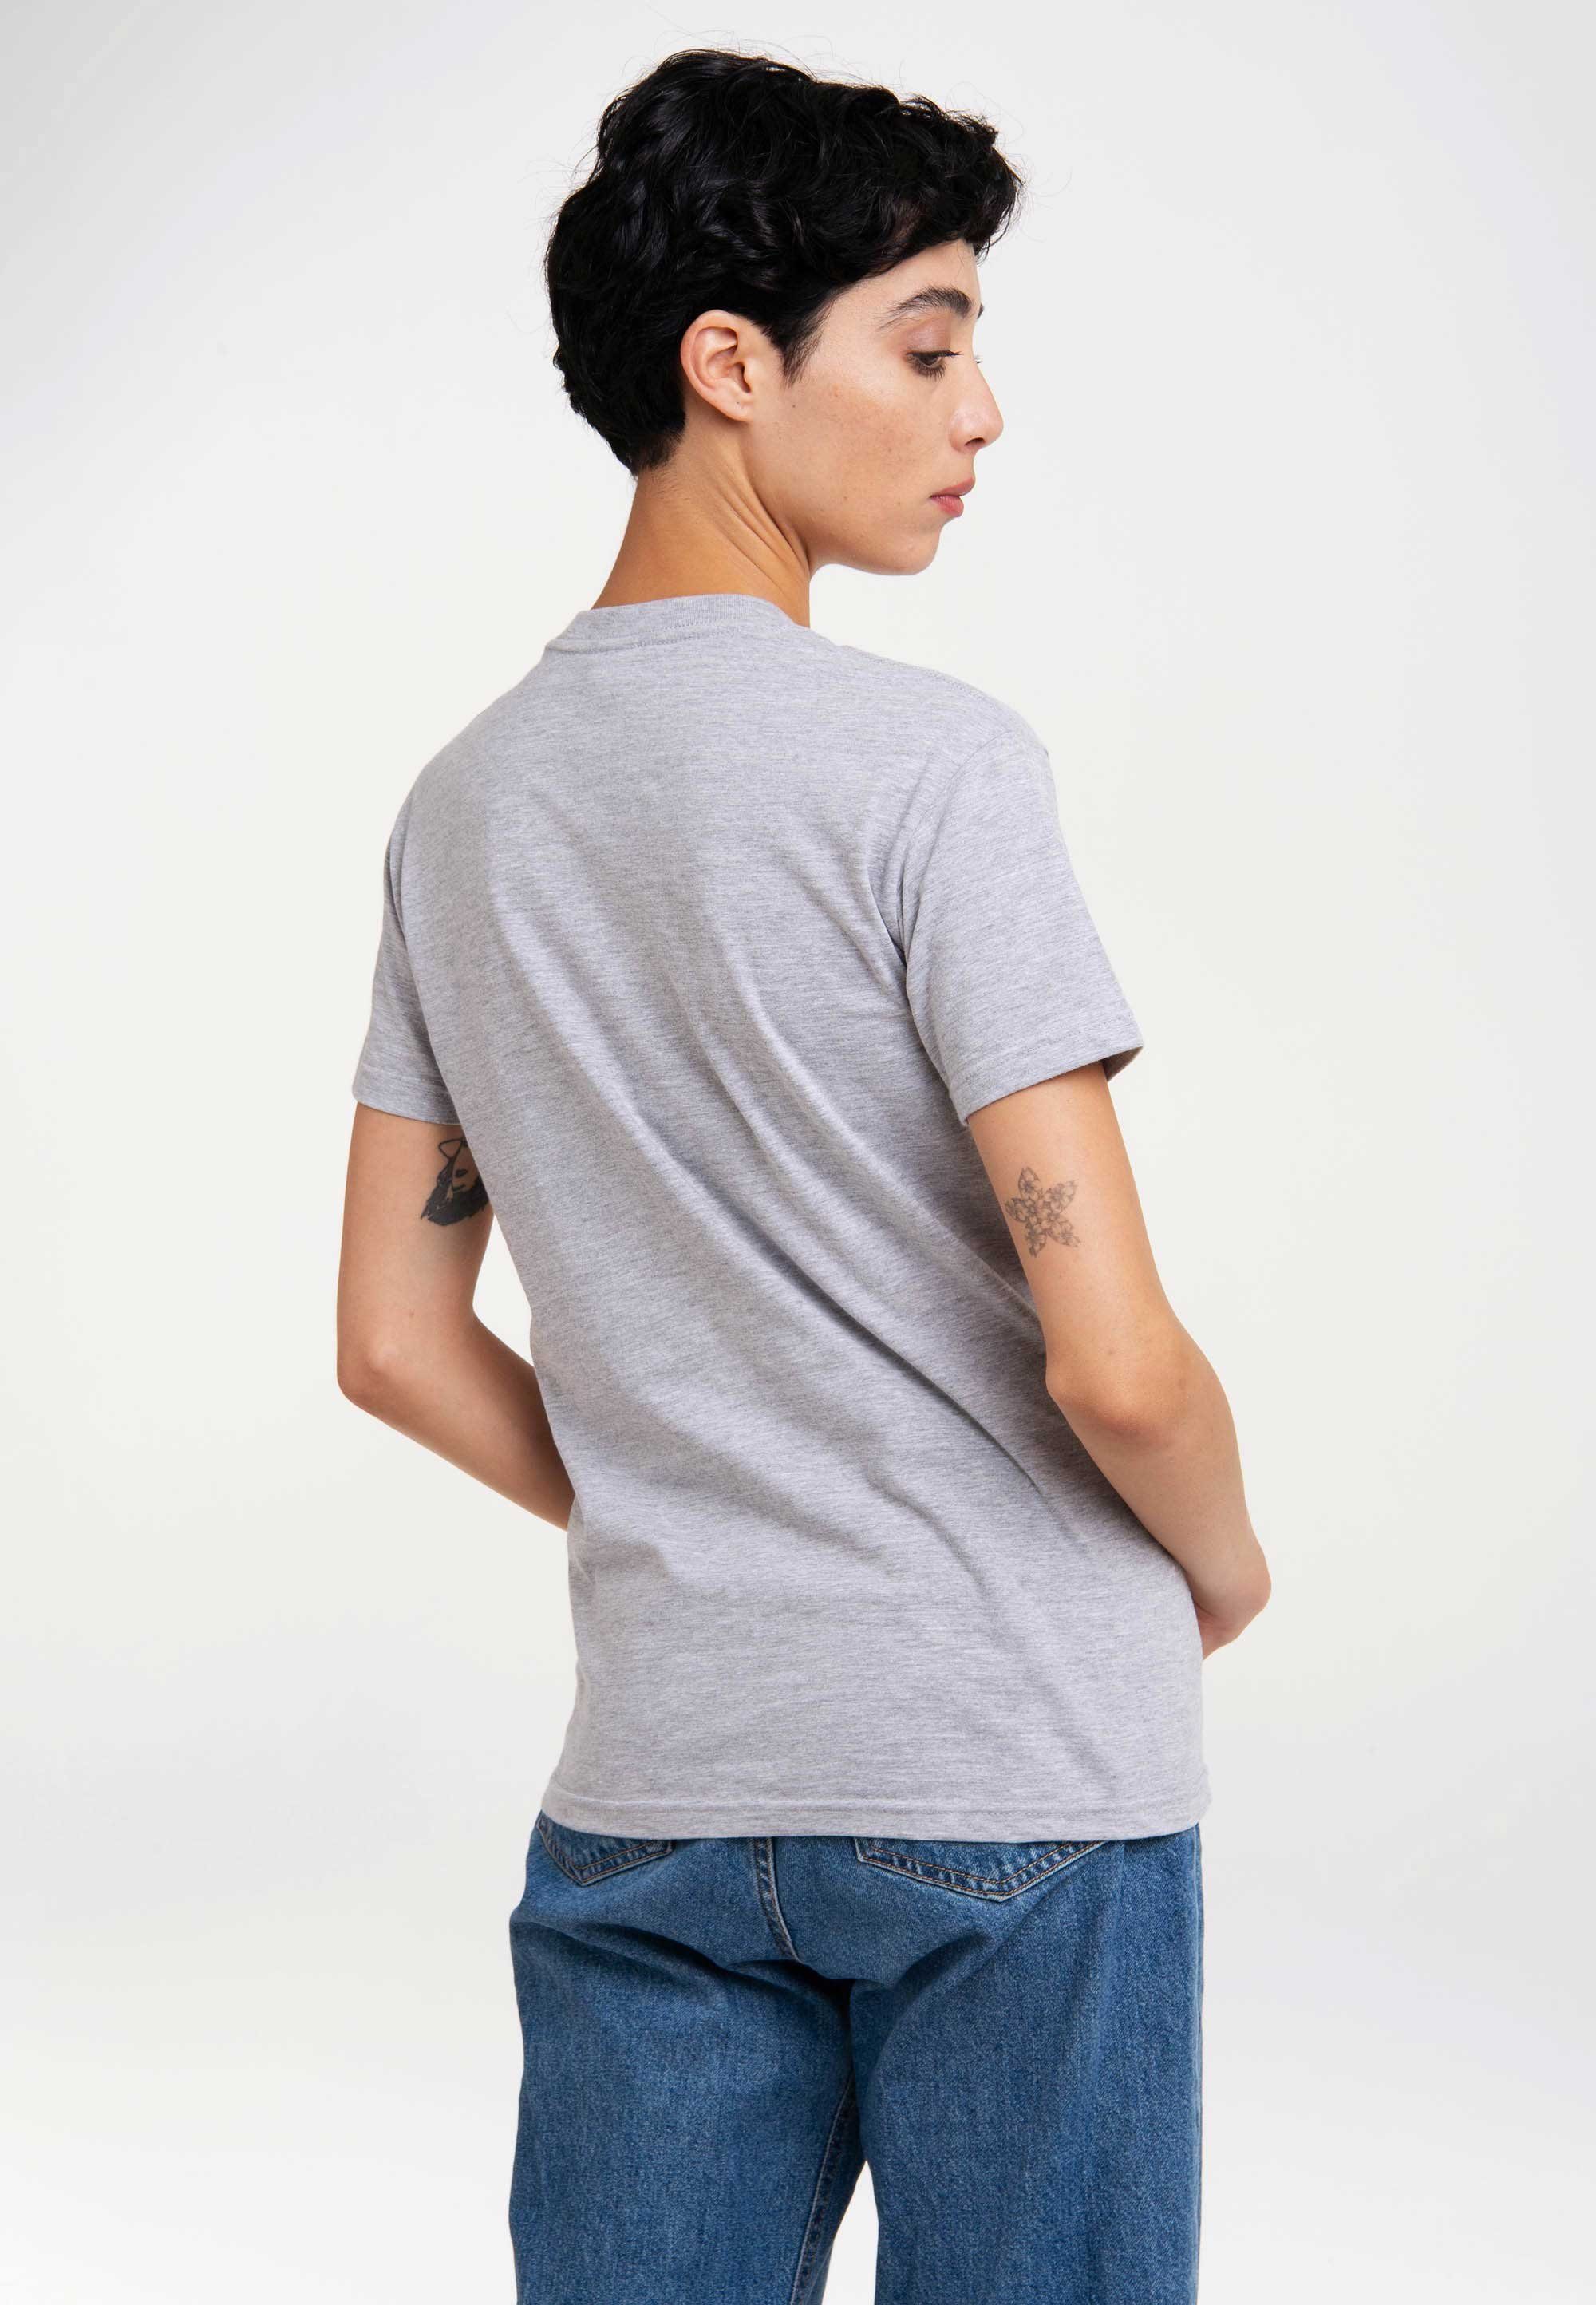 Krümelmonster T-Shirt Originalddesign Sesamstrasse mit - lizenziertem grau-meliert LOGOSHIRT